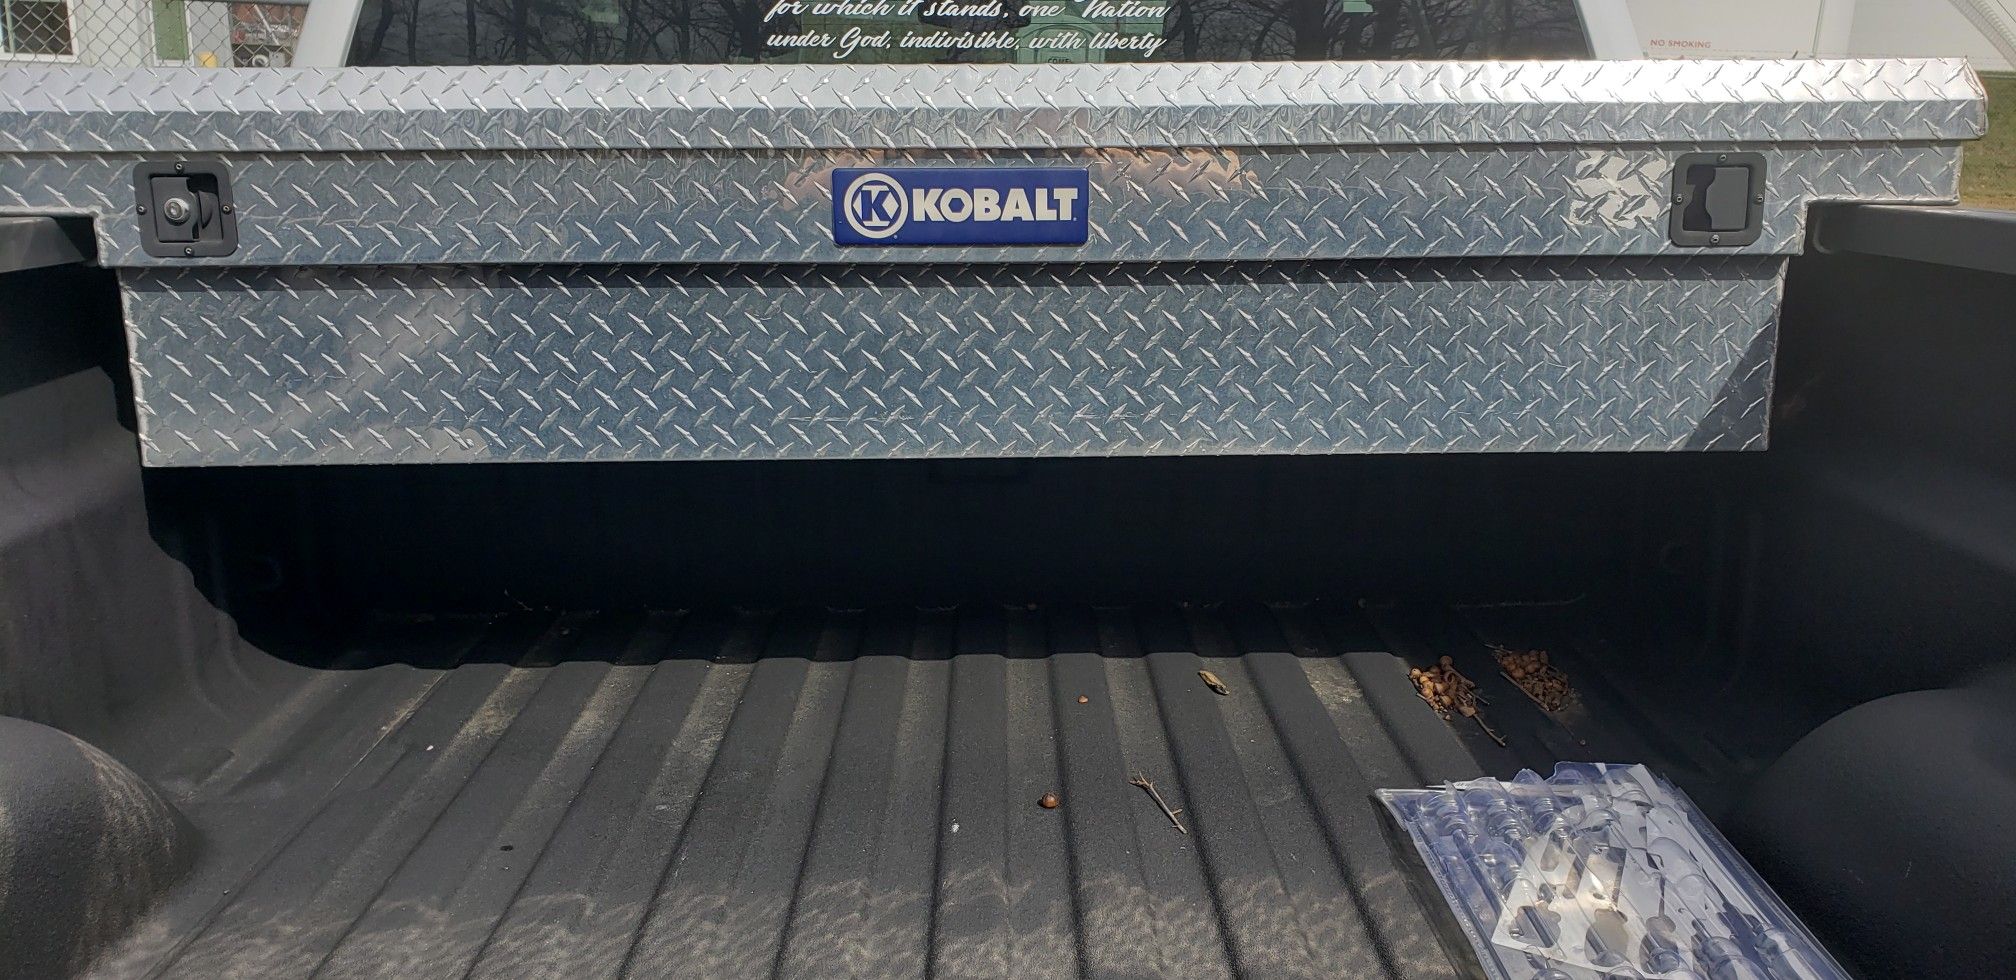 Kobalt truck bed tool box